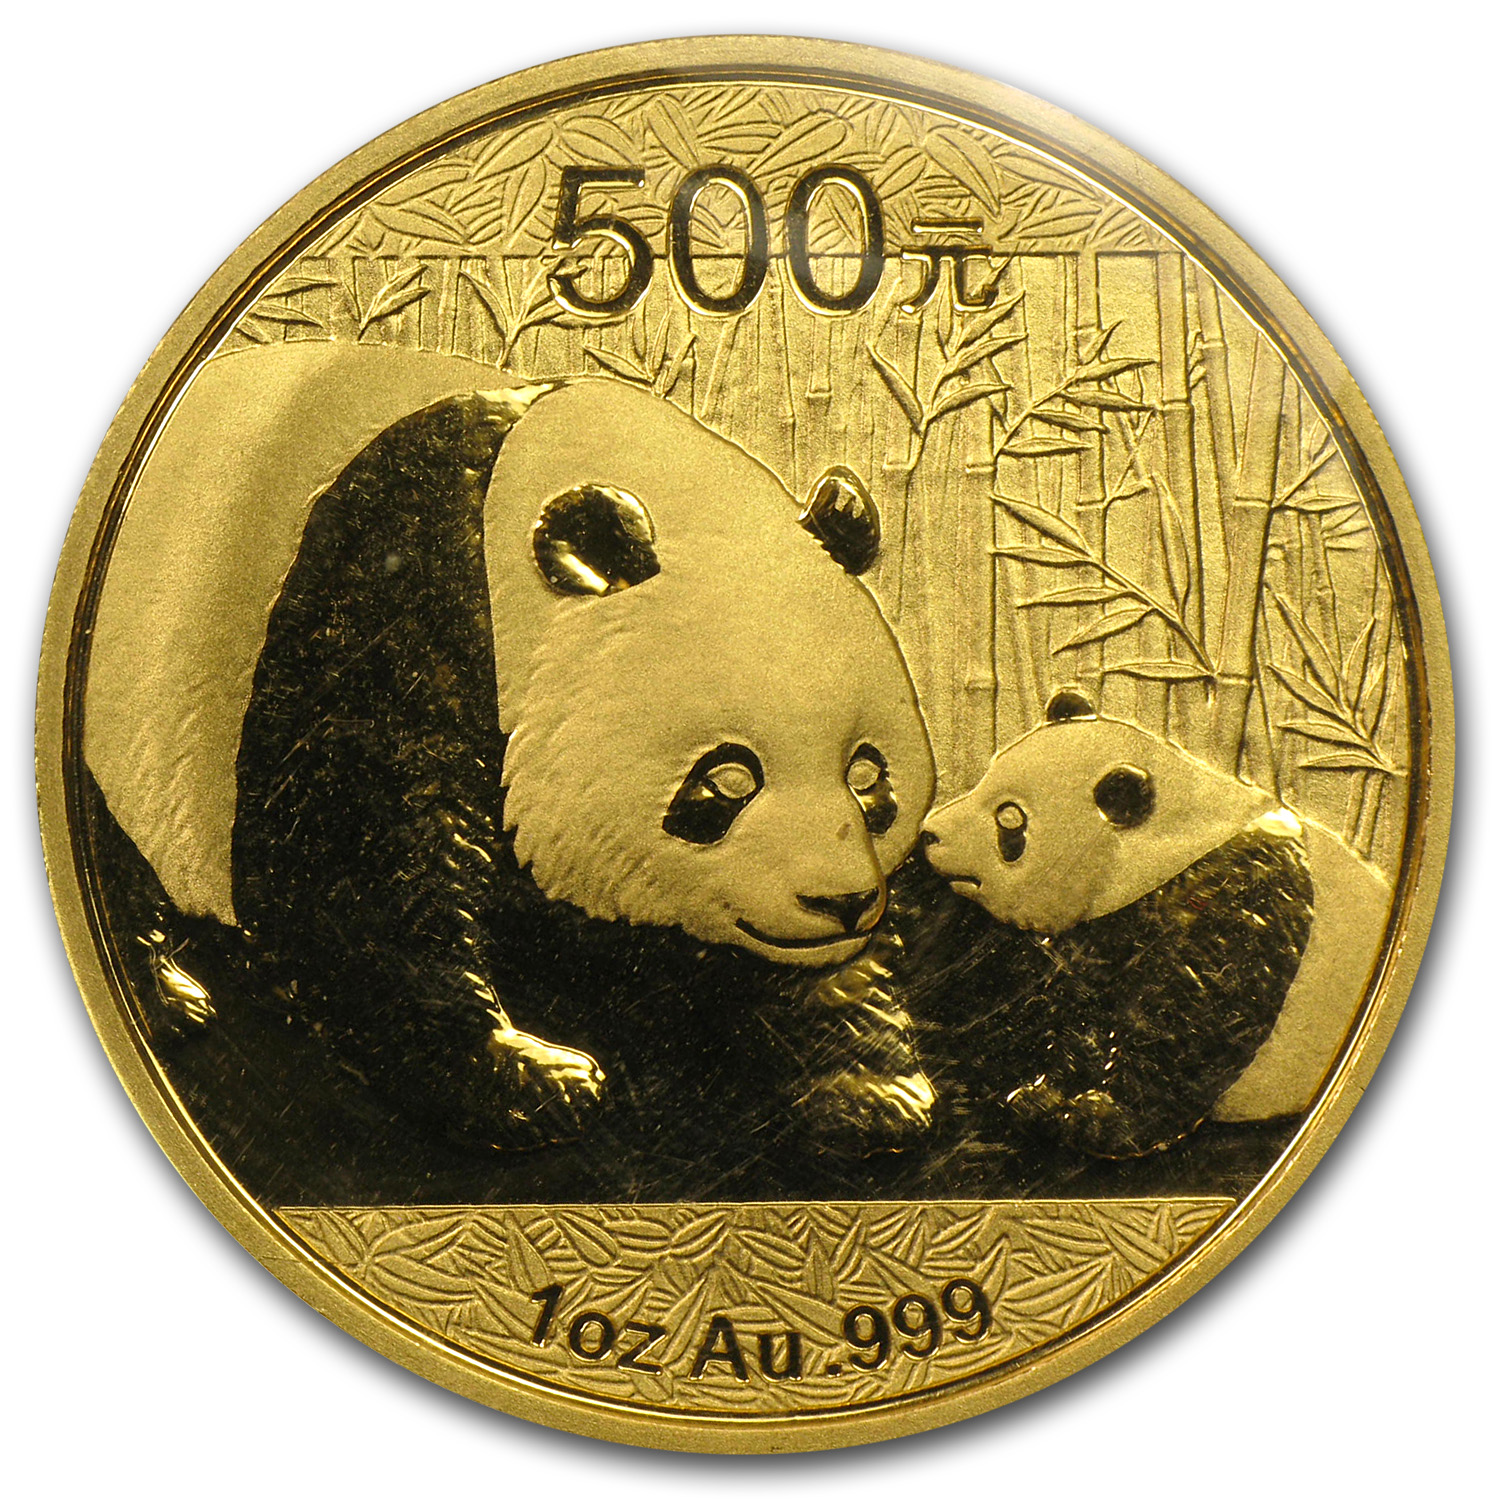 Buy 2011 China 1 oz Gold Panda BU (Sealed)